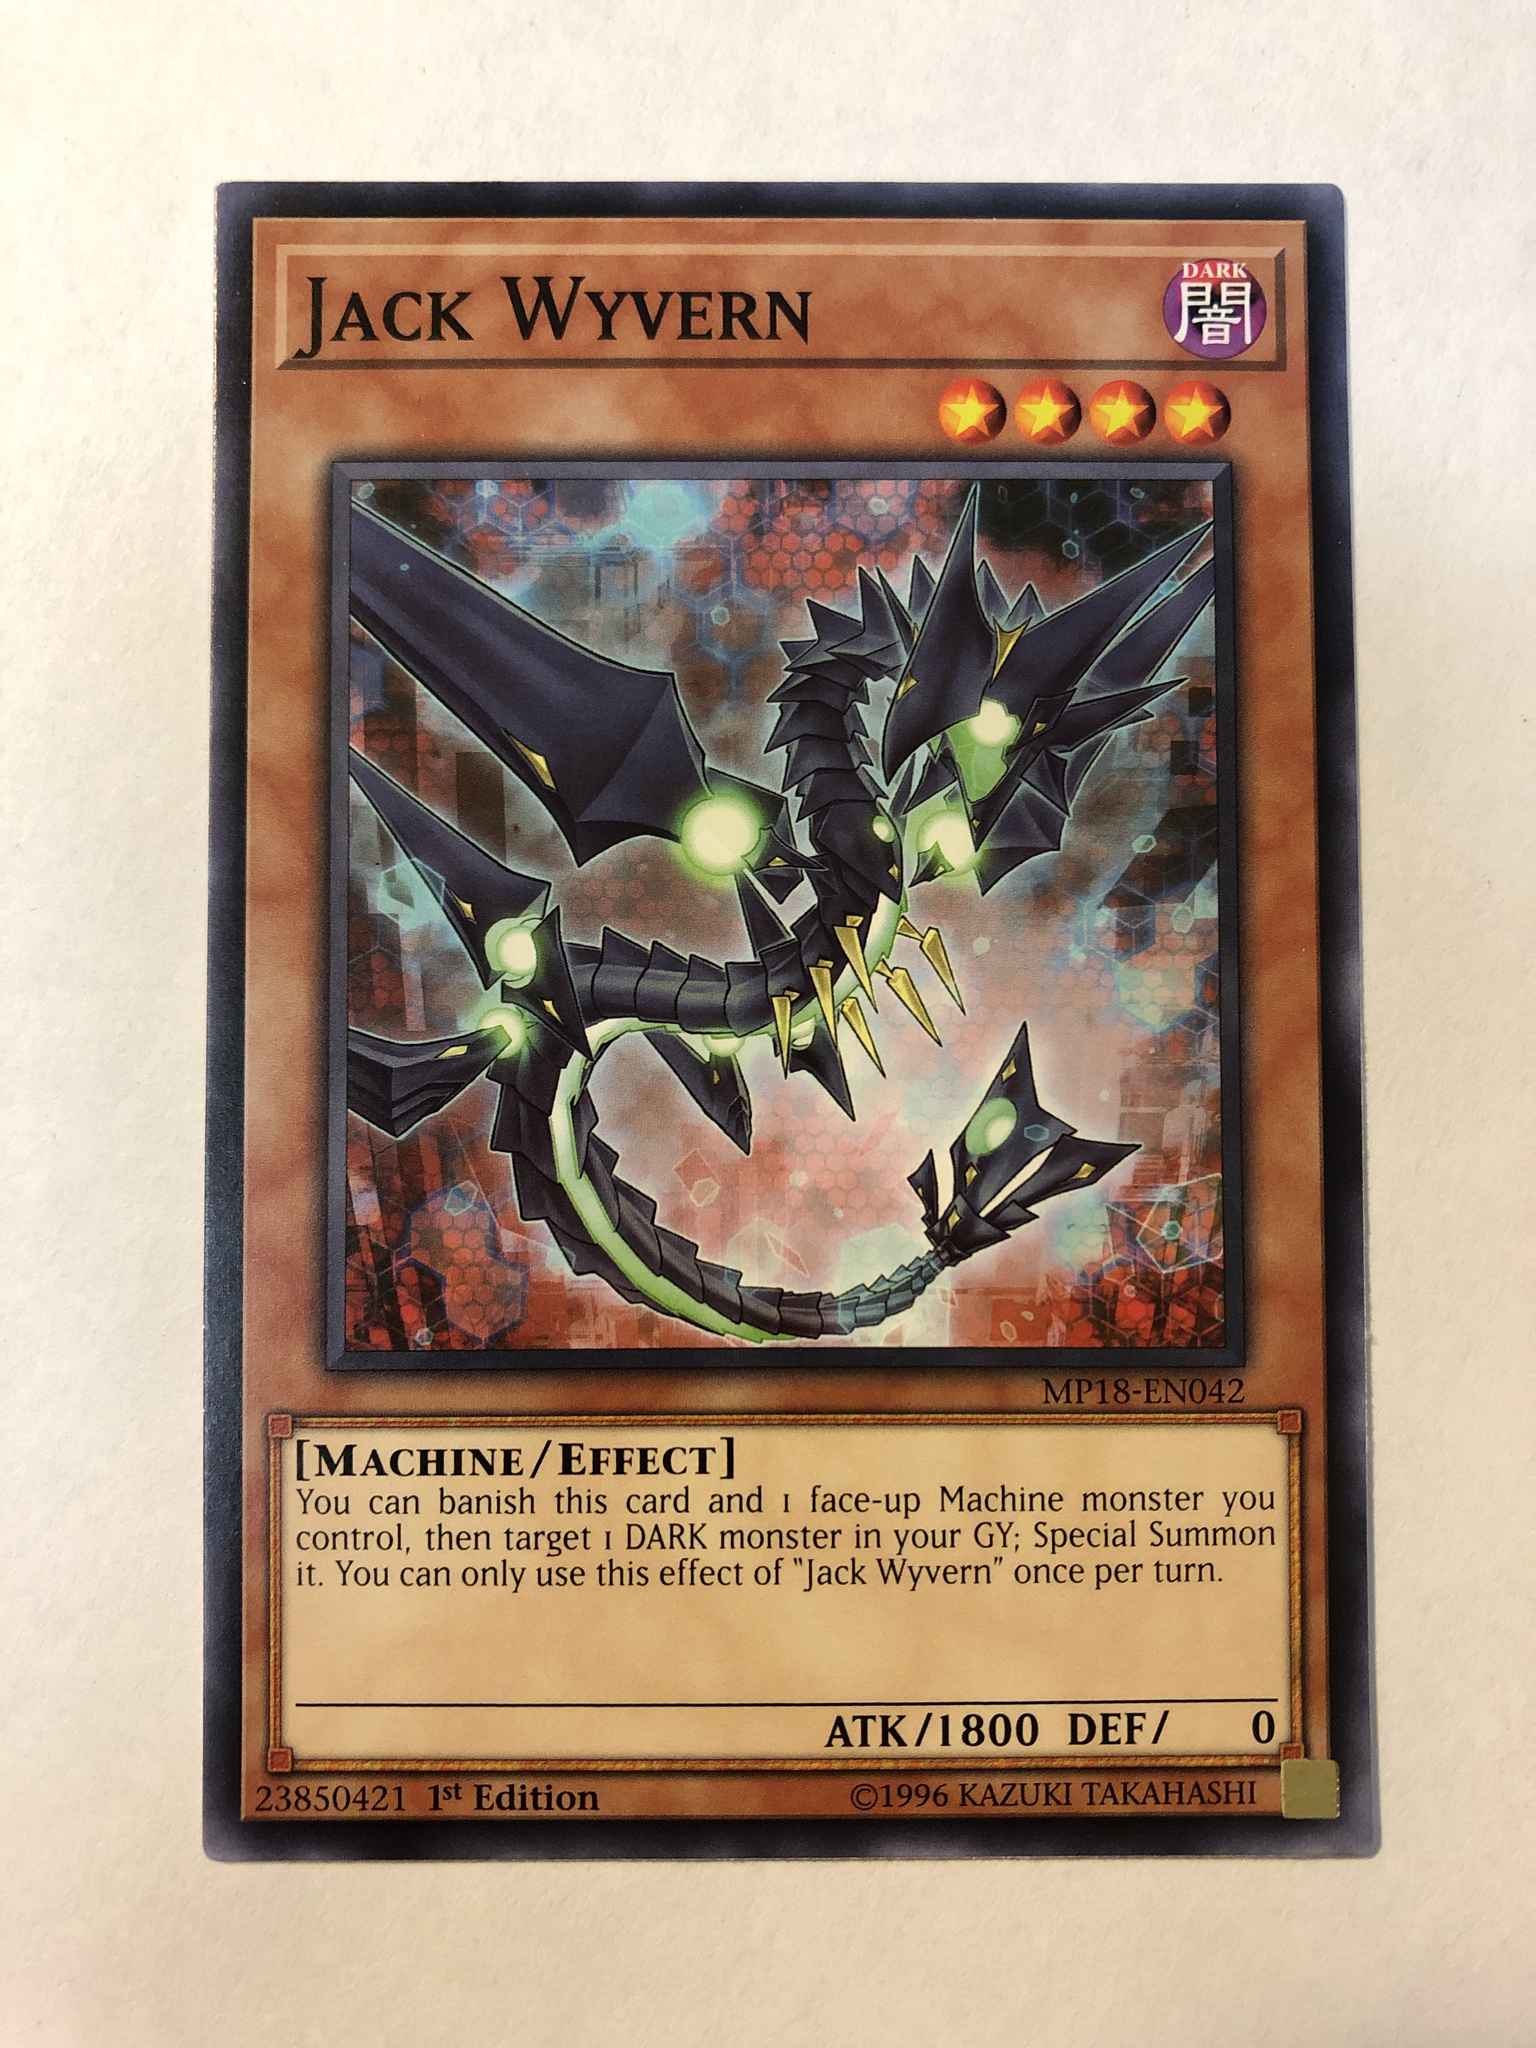 1st Edition Yu-Gi-Oh: Jack Wyvern MP18-EN042 Common Card